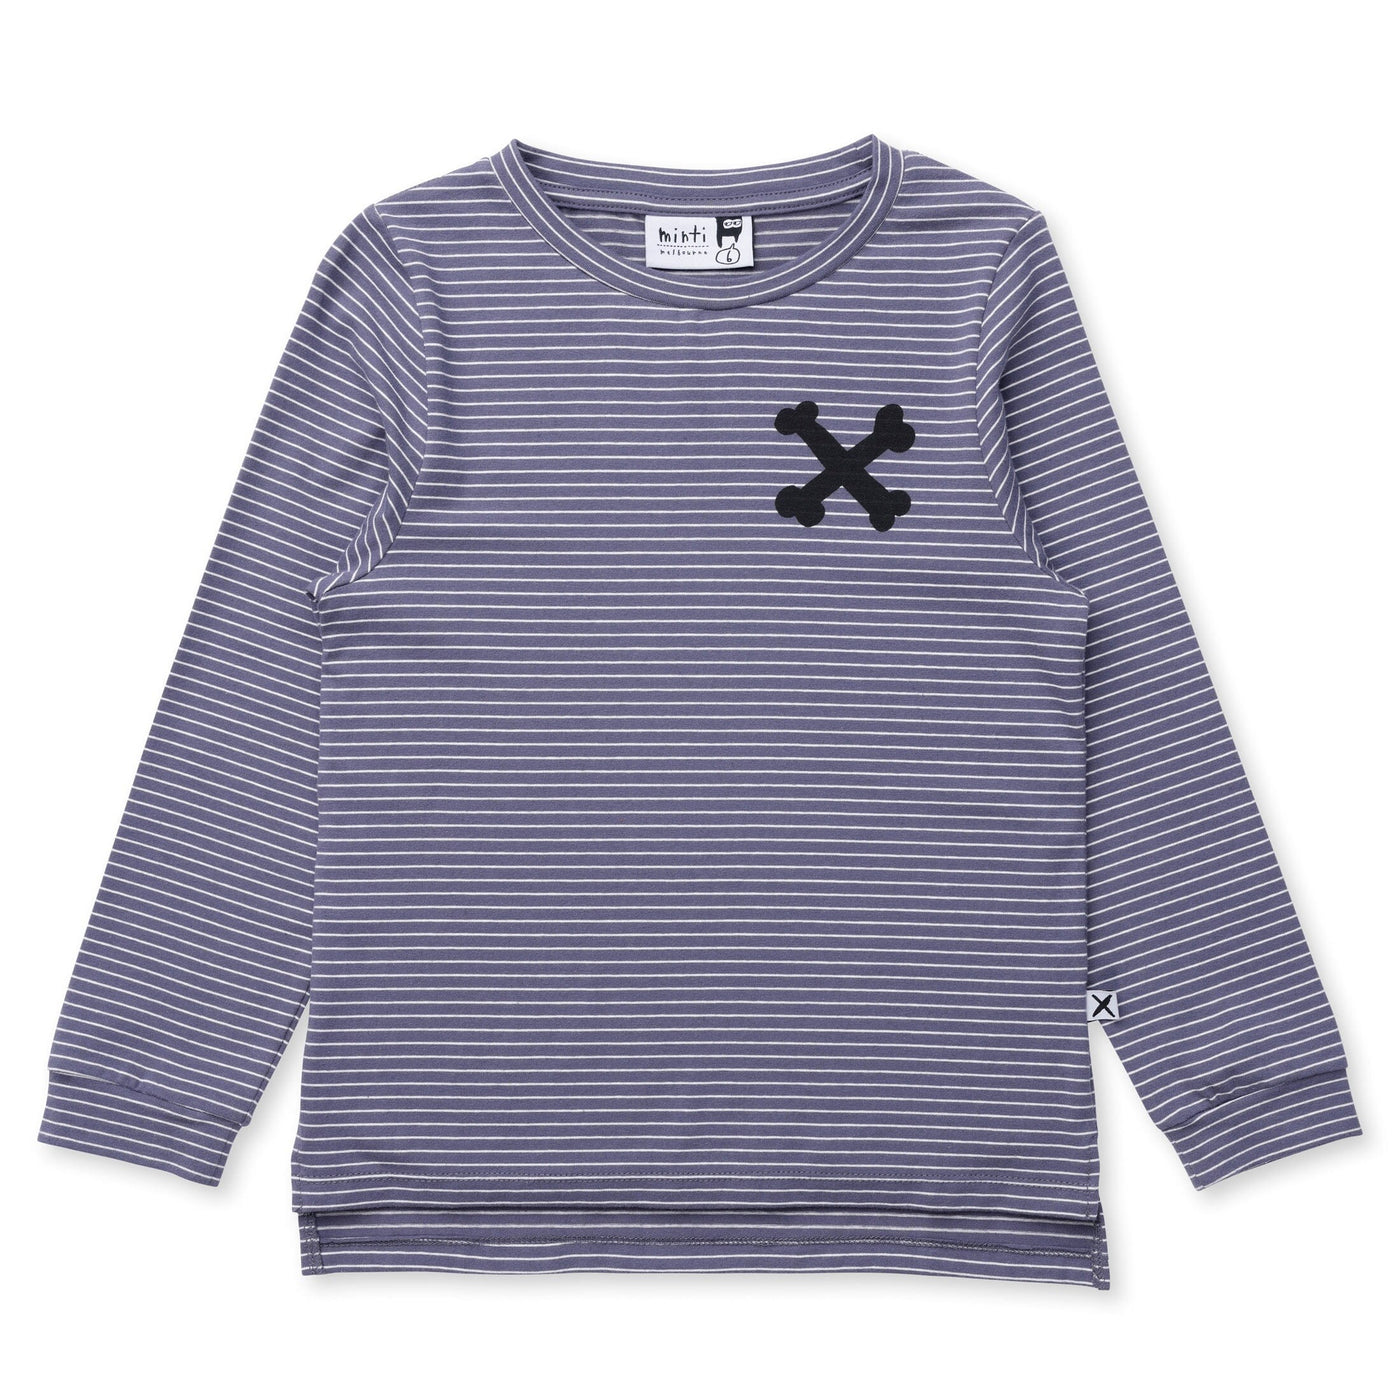 Minti Seaweed Monster Tee - Storm Stripe Long Sleeve T-Shirt Minti 